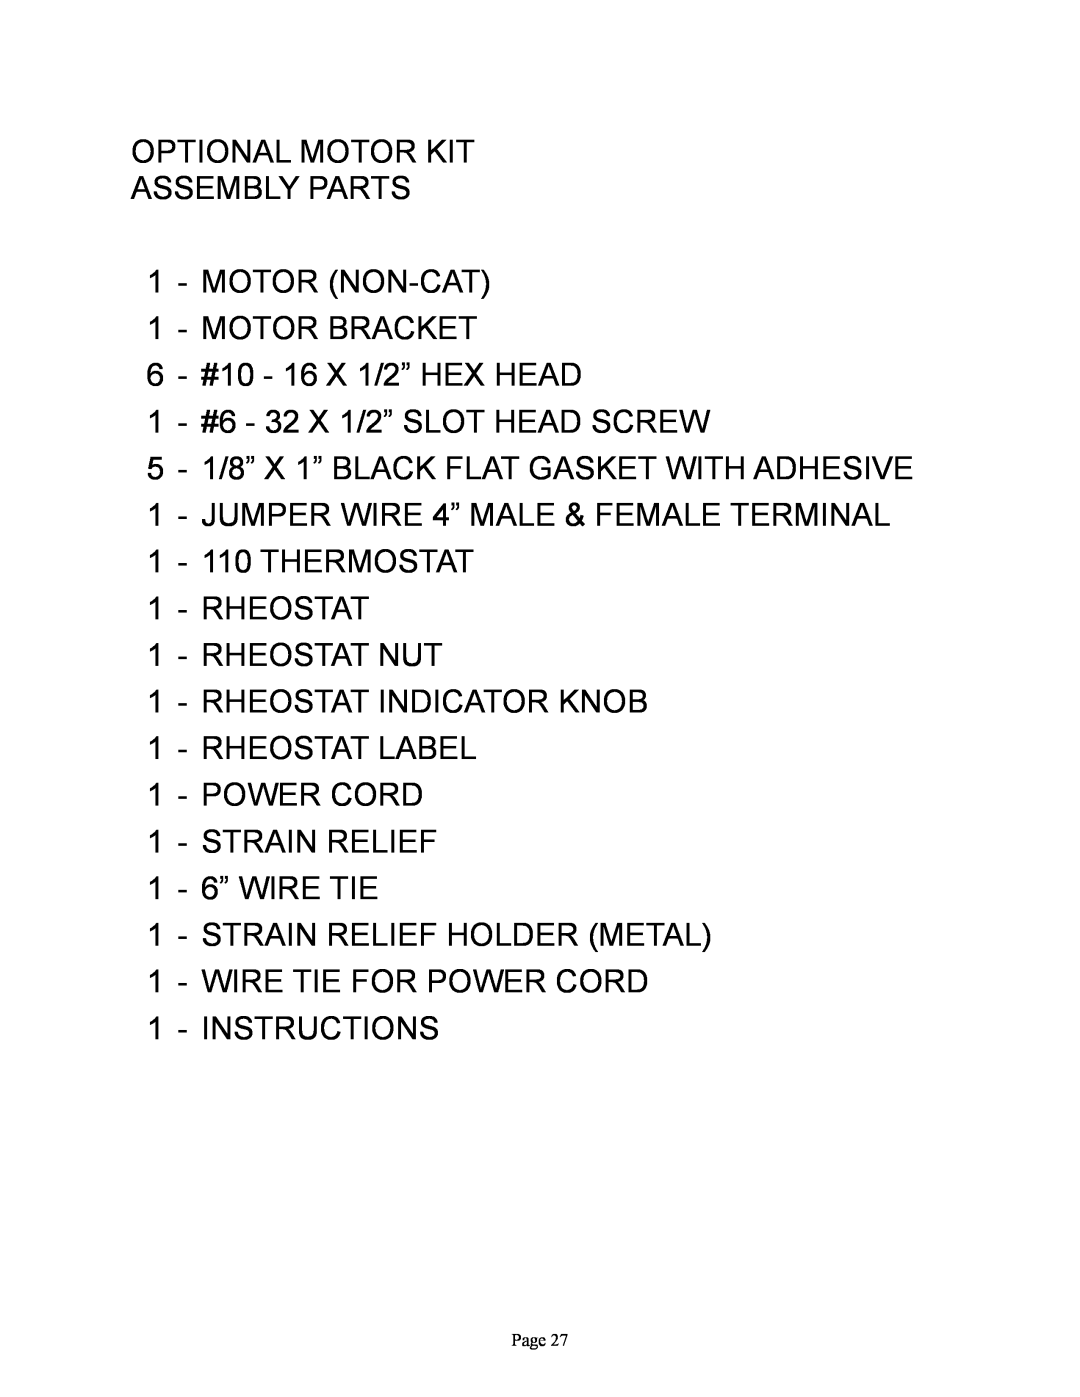 New Buck Corporation FS 21 installation instructions Optional Motor Kit Assembly Parts 